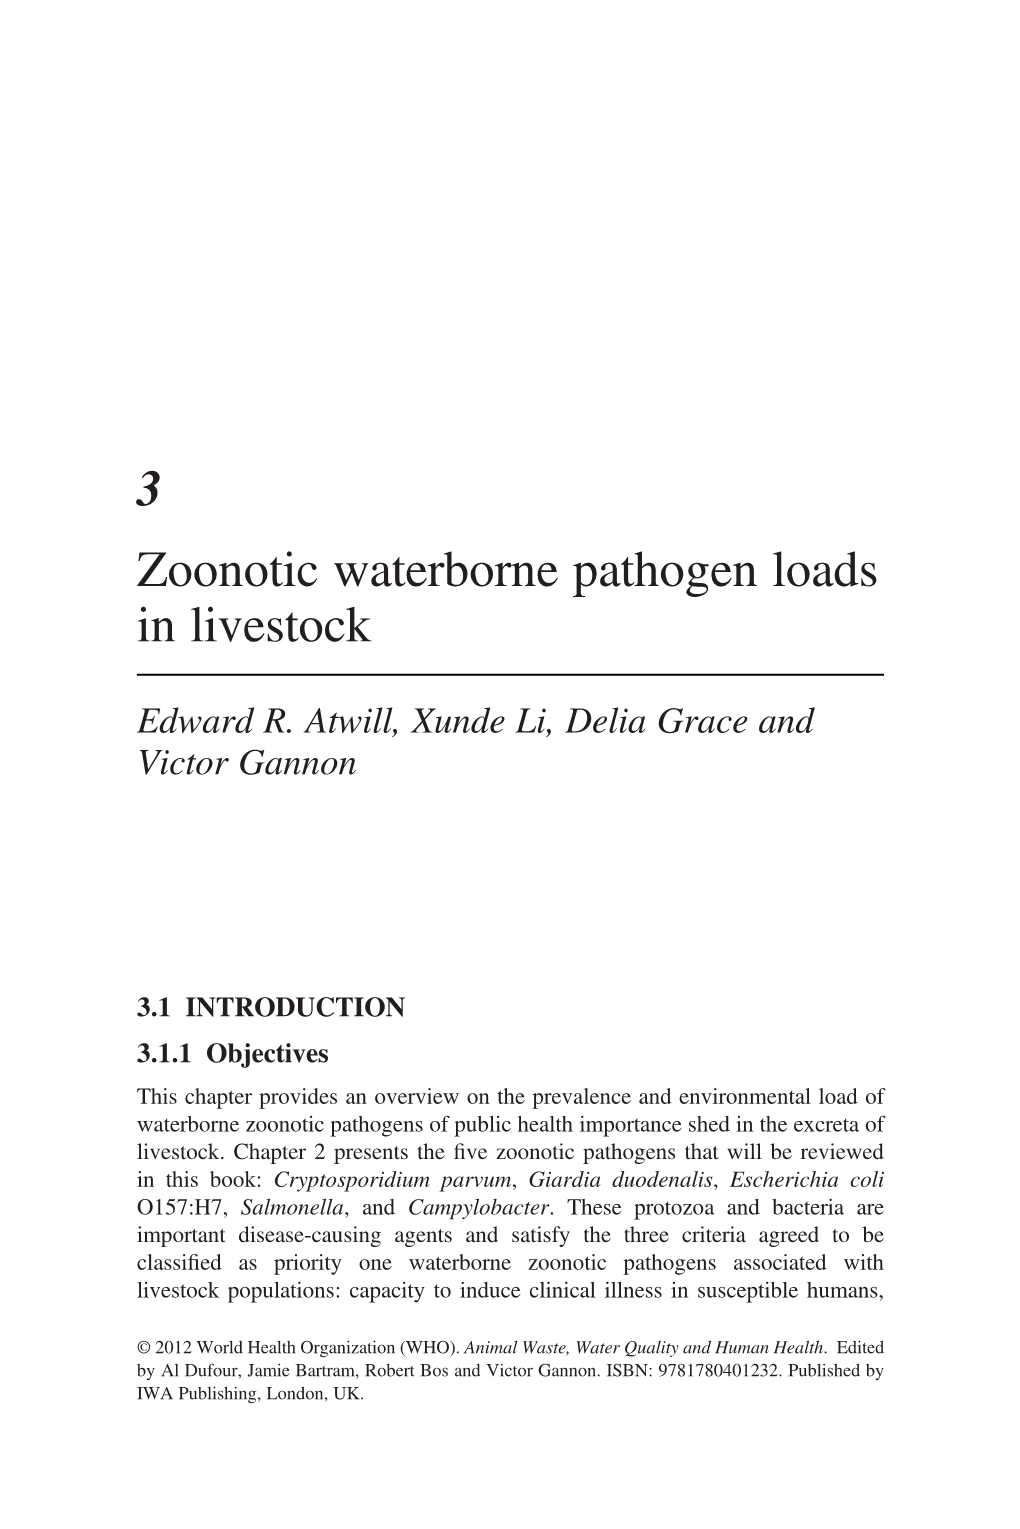 3 Zoonotic Waterborne Pathogen Loads in Livestock